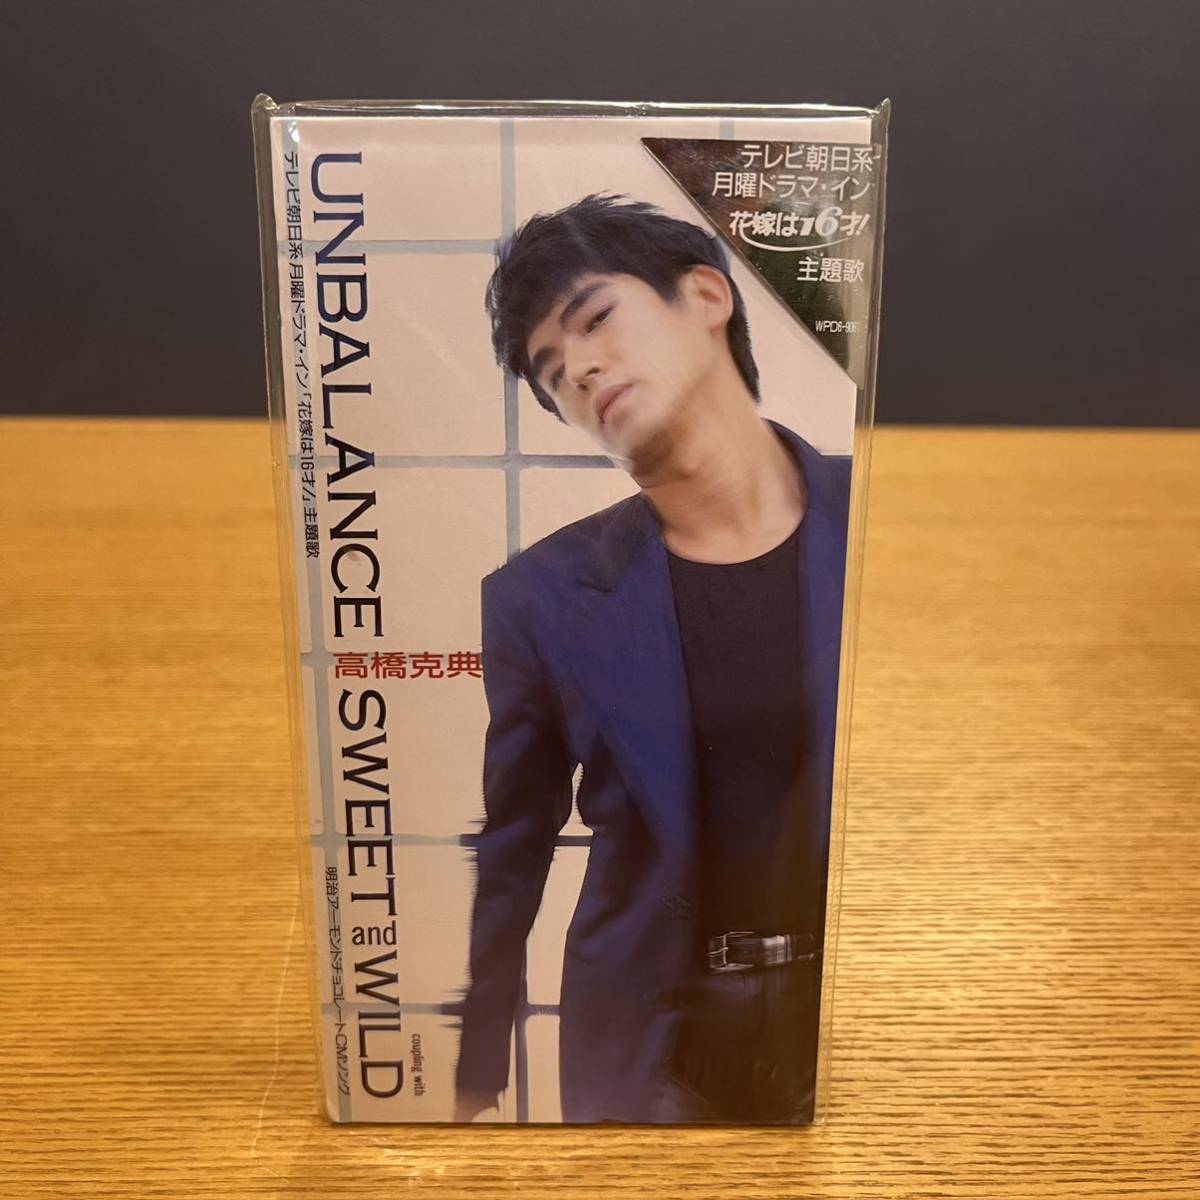  Takahashi Katsunori UNBALANCE 8 centimeter CD unopened goods single CD single record 